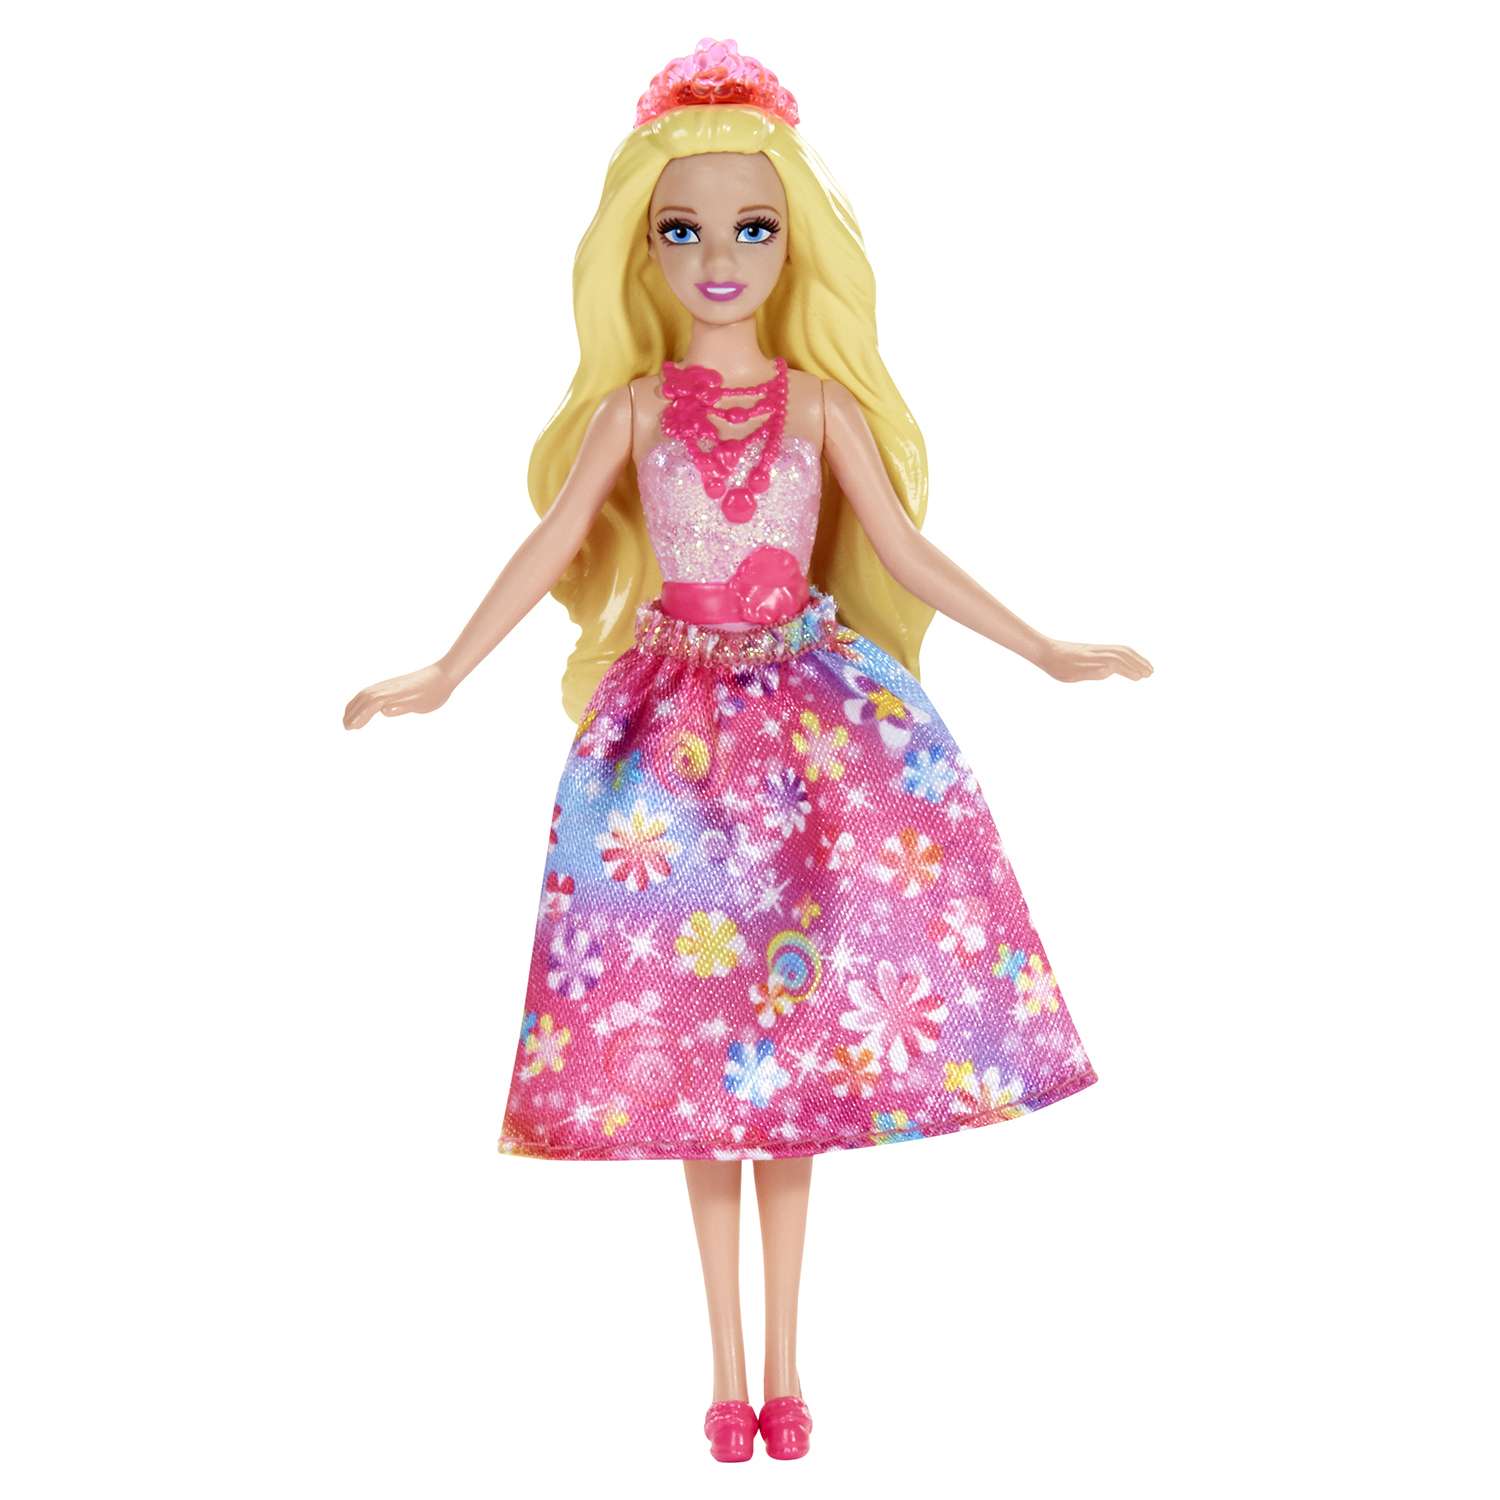 Мини куклы барби. Куклы мини Барби Маттел. Mattel Barbie v7050 Барби сказочные мини-куклы. Принцесса Алекса Барби. Кукла Барби 45 см.